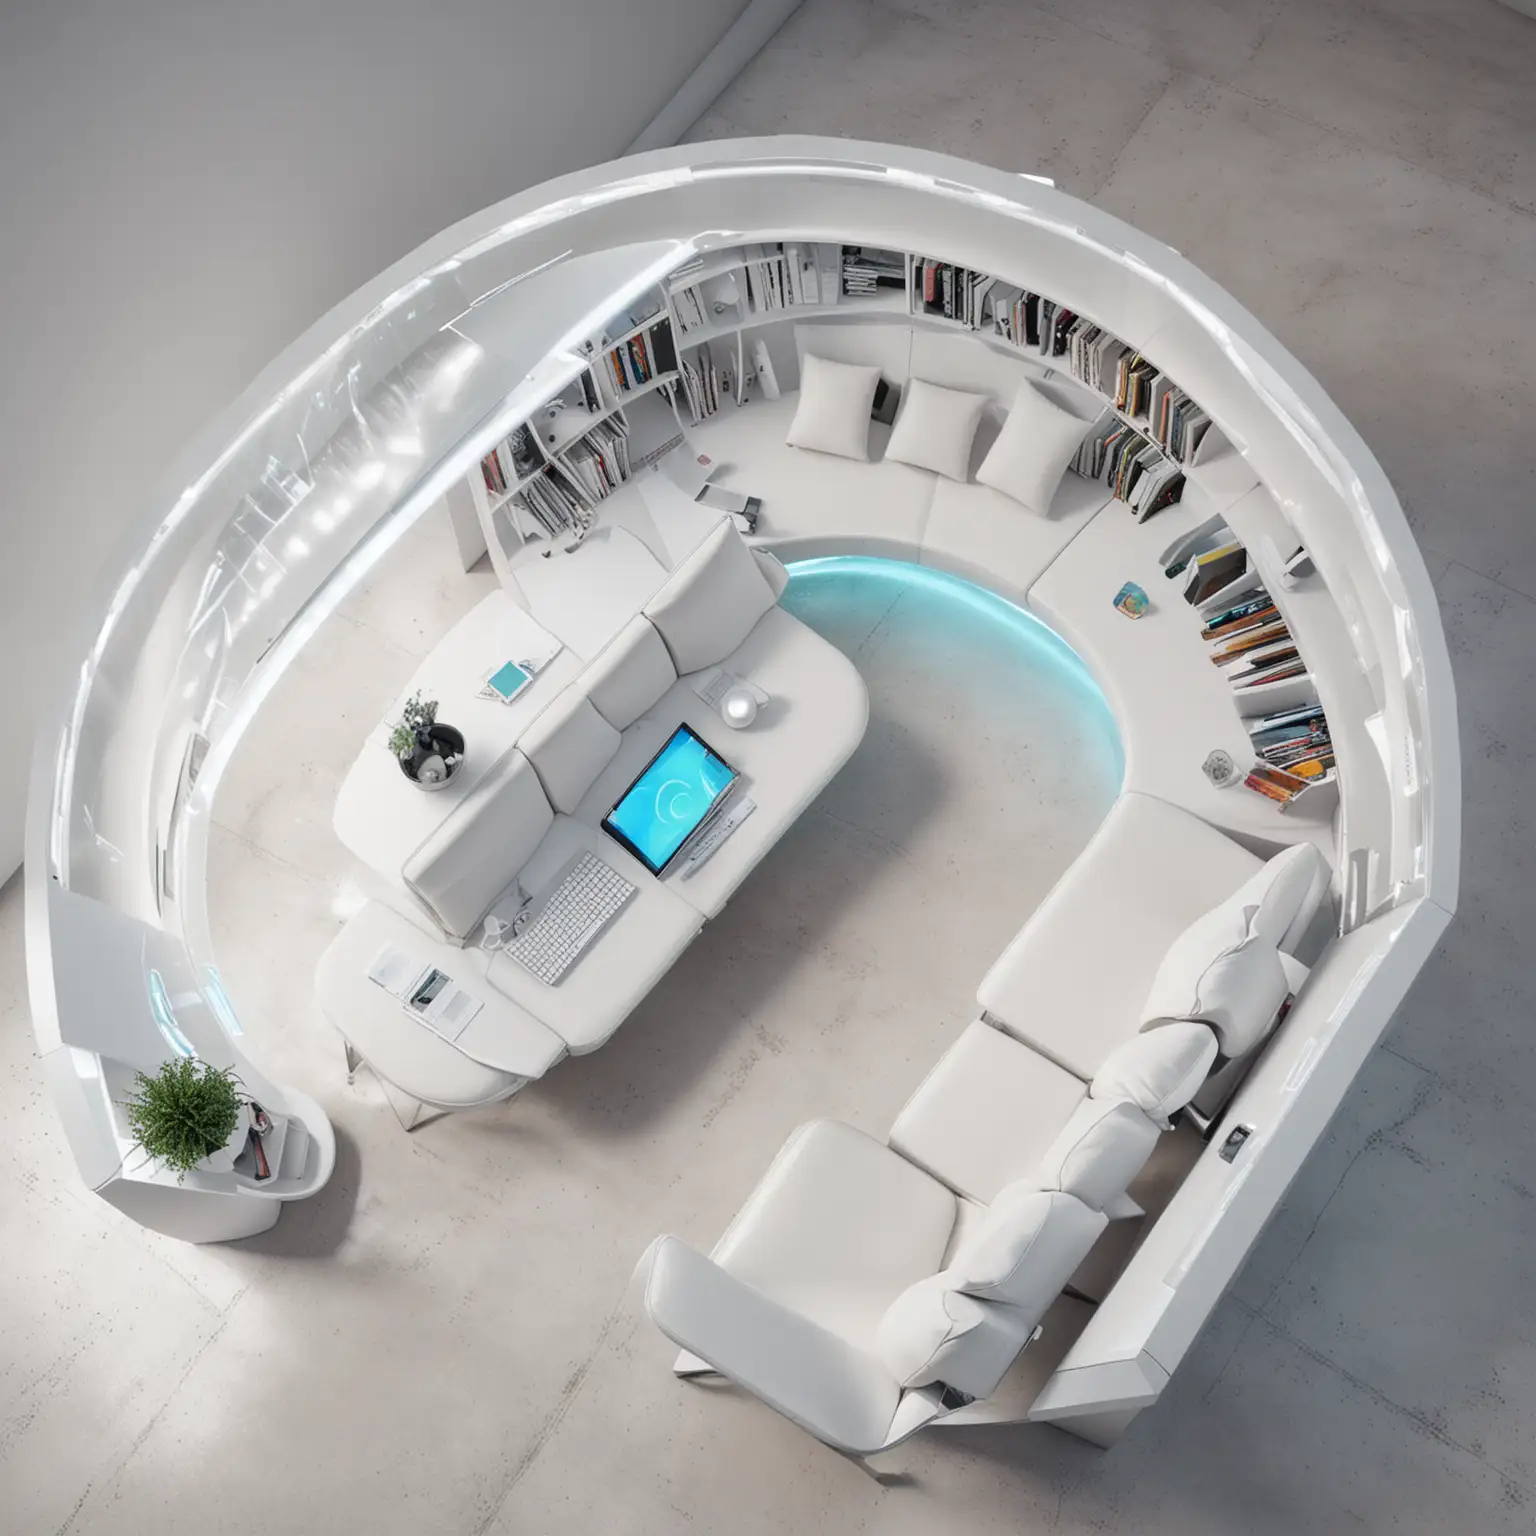 Futuristic Solo Study Room with Interactive Hologram Desk and Books